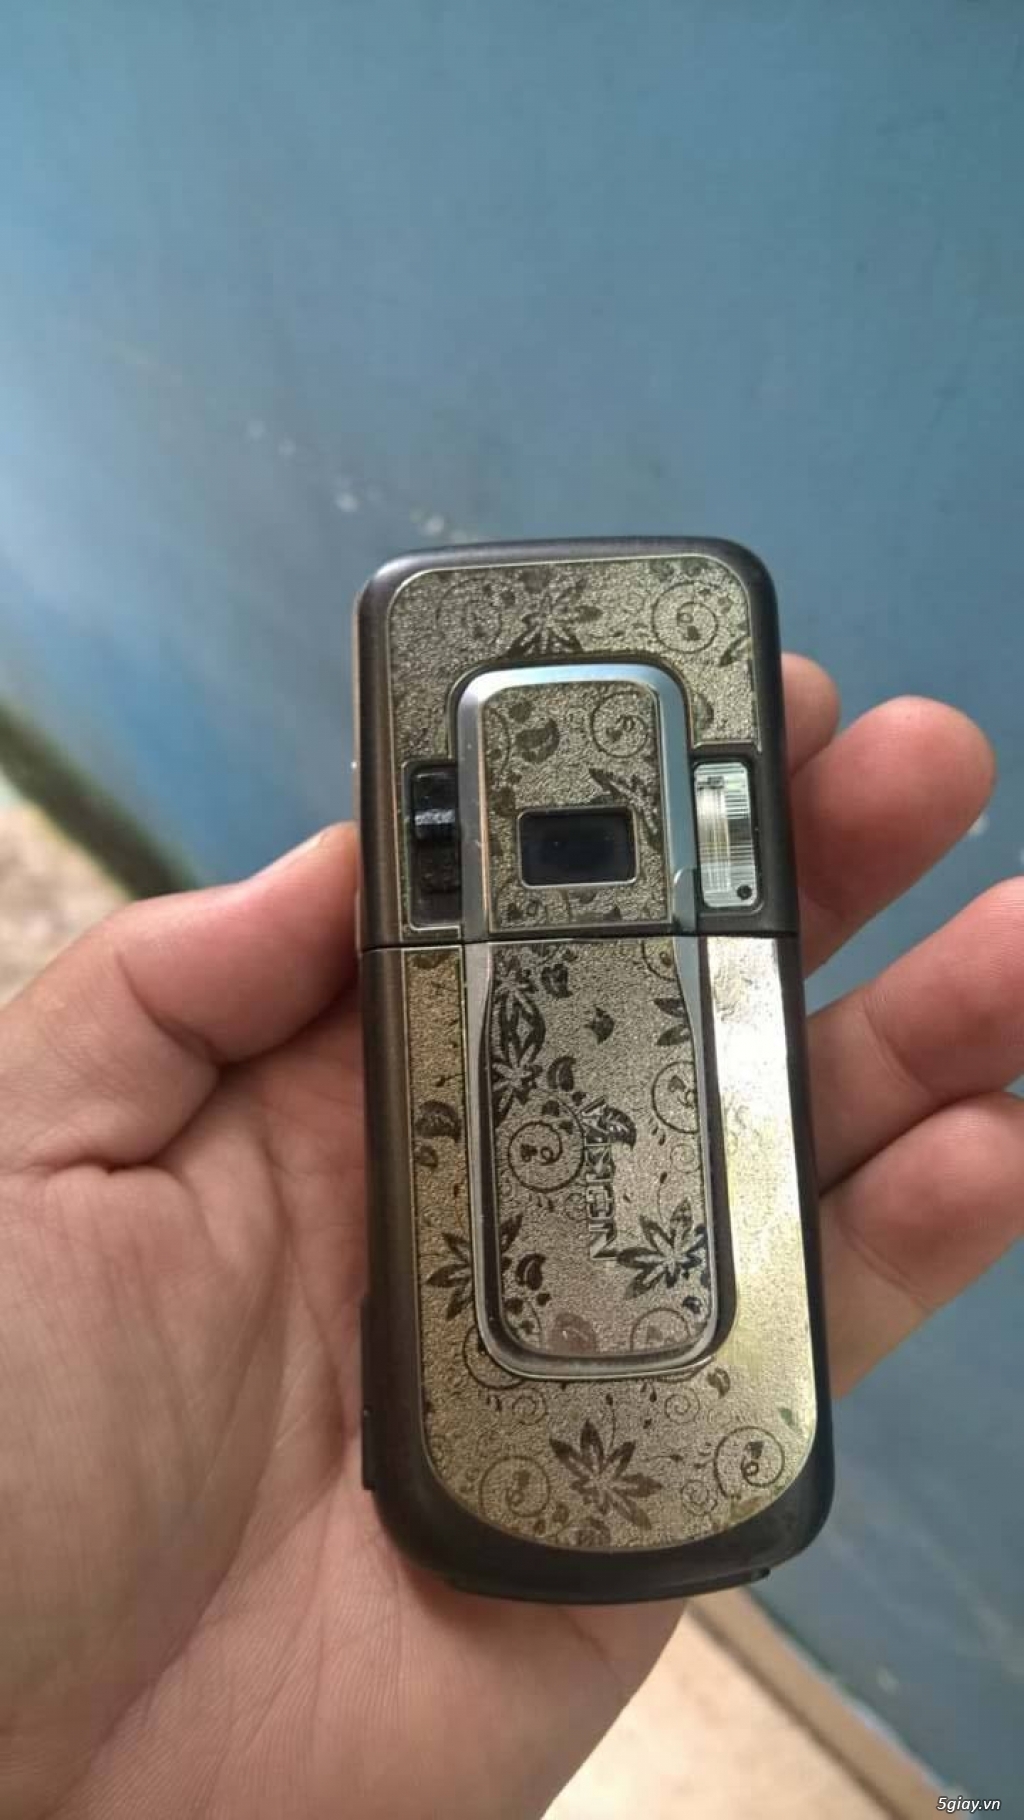 Nokia e63, n2630, nokia x2-01, n6233, n6120c, huawei g6680 - 11